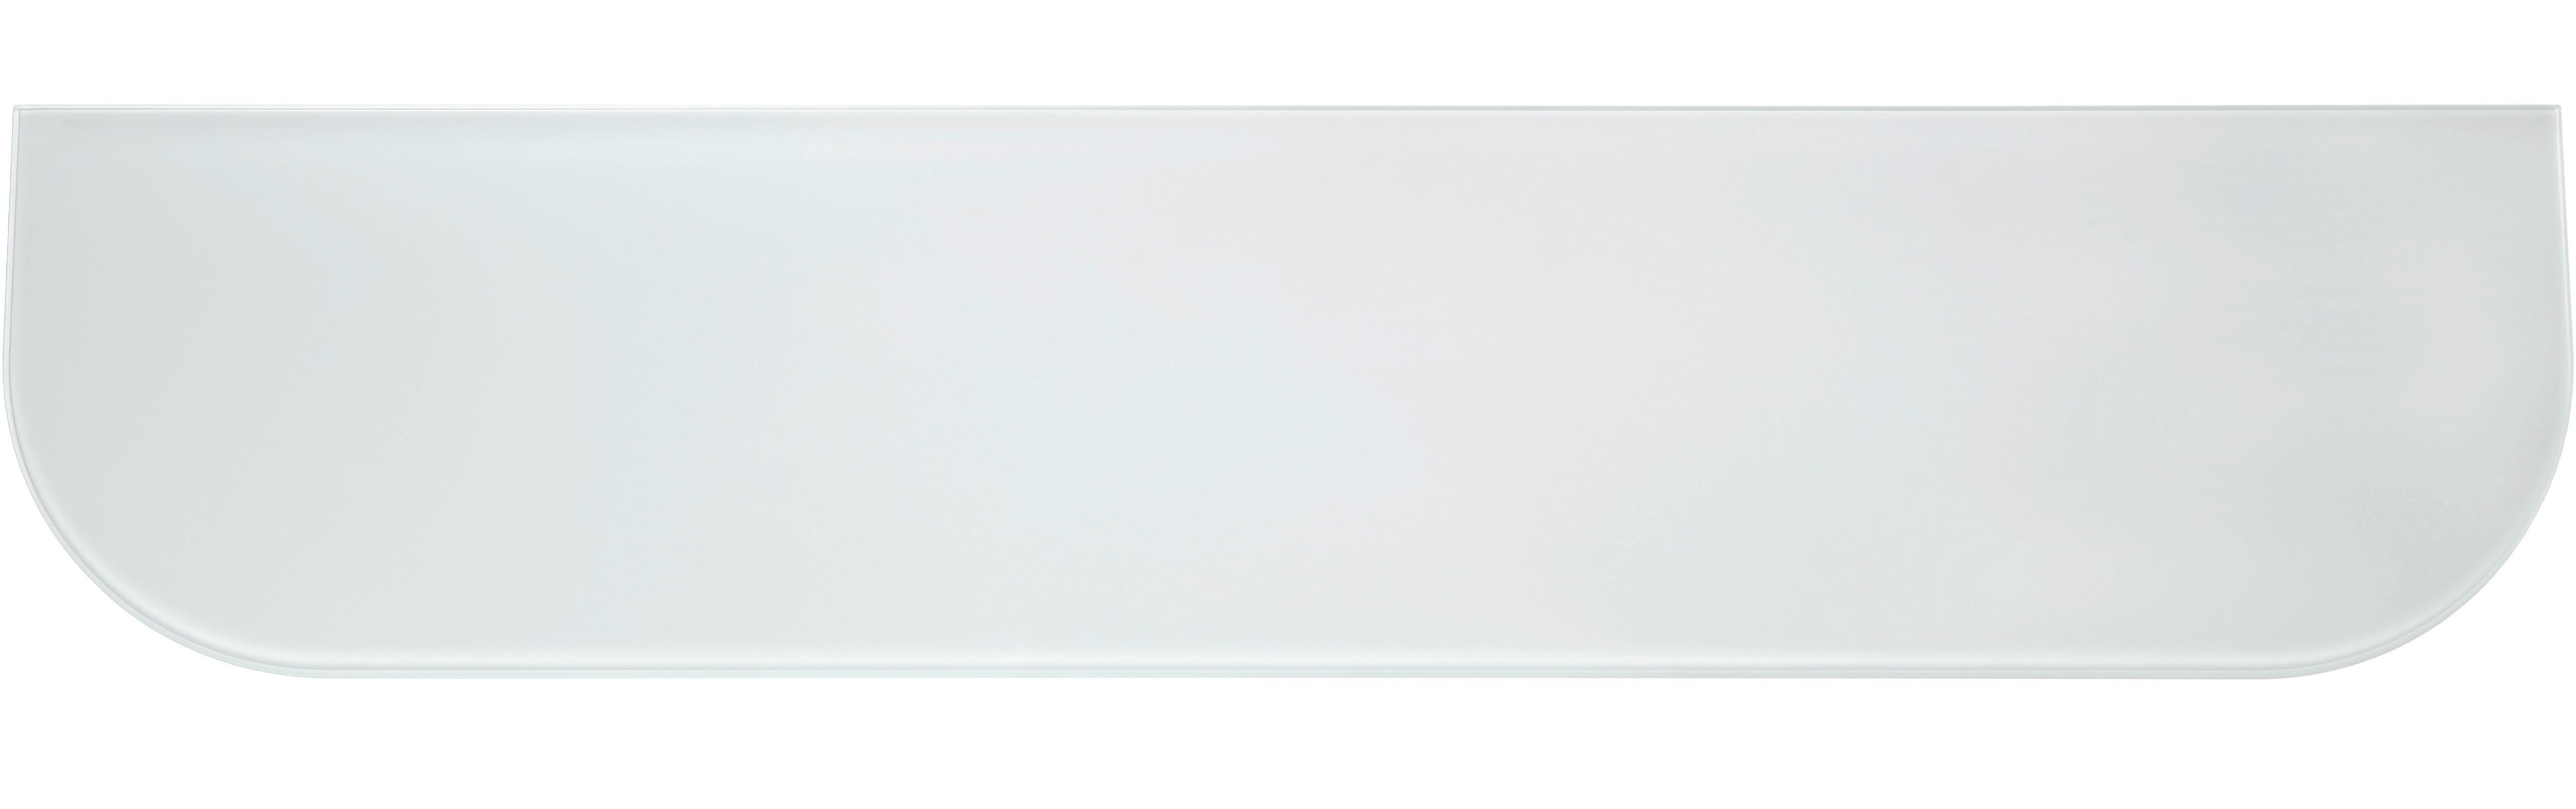 Wandregal Glas Gerundet Weiß - Opal, Glas (78/0,6/18cm) - Modern Living